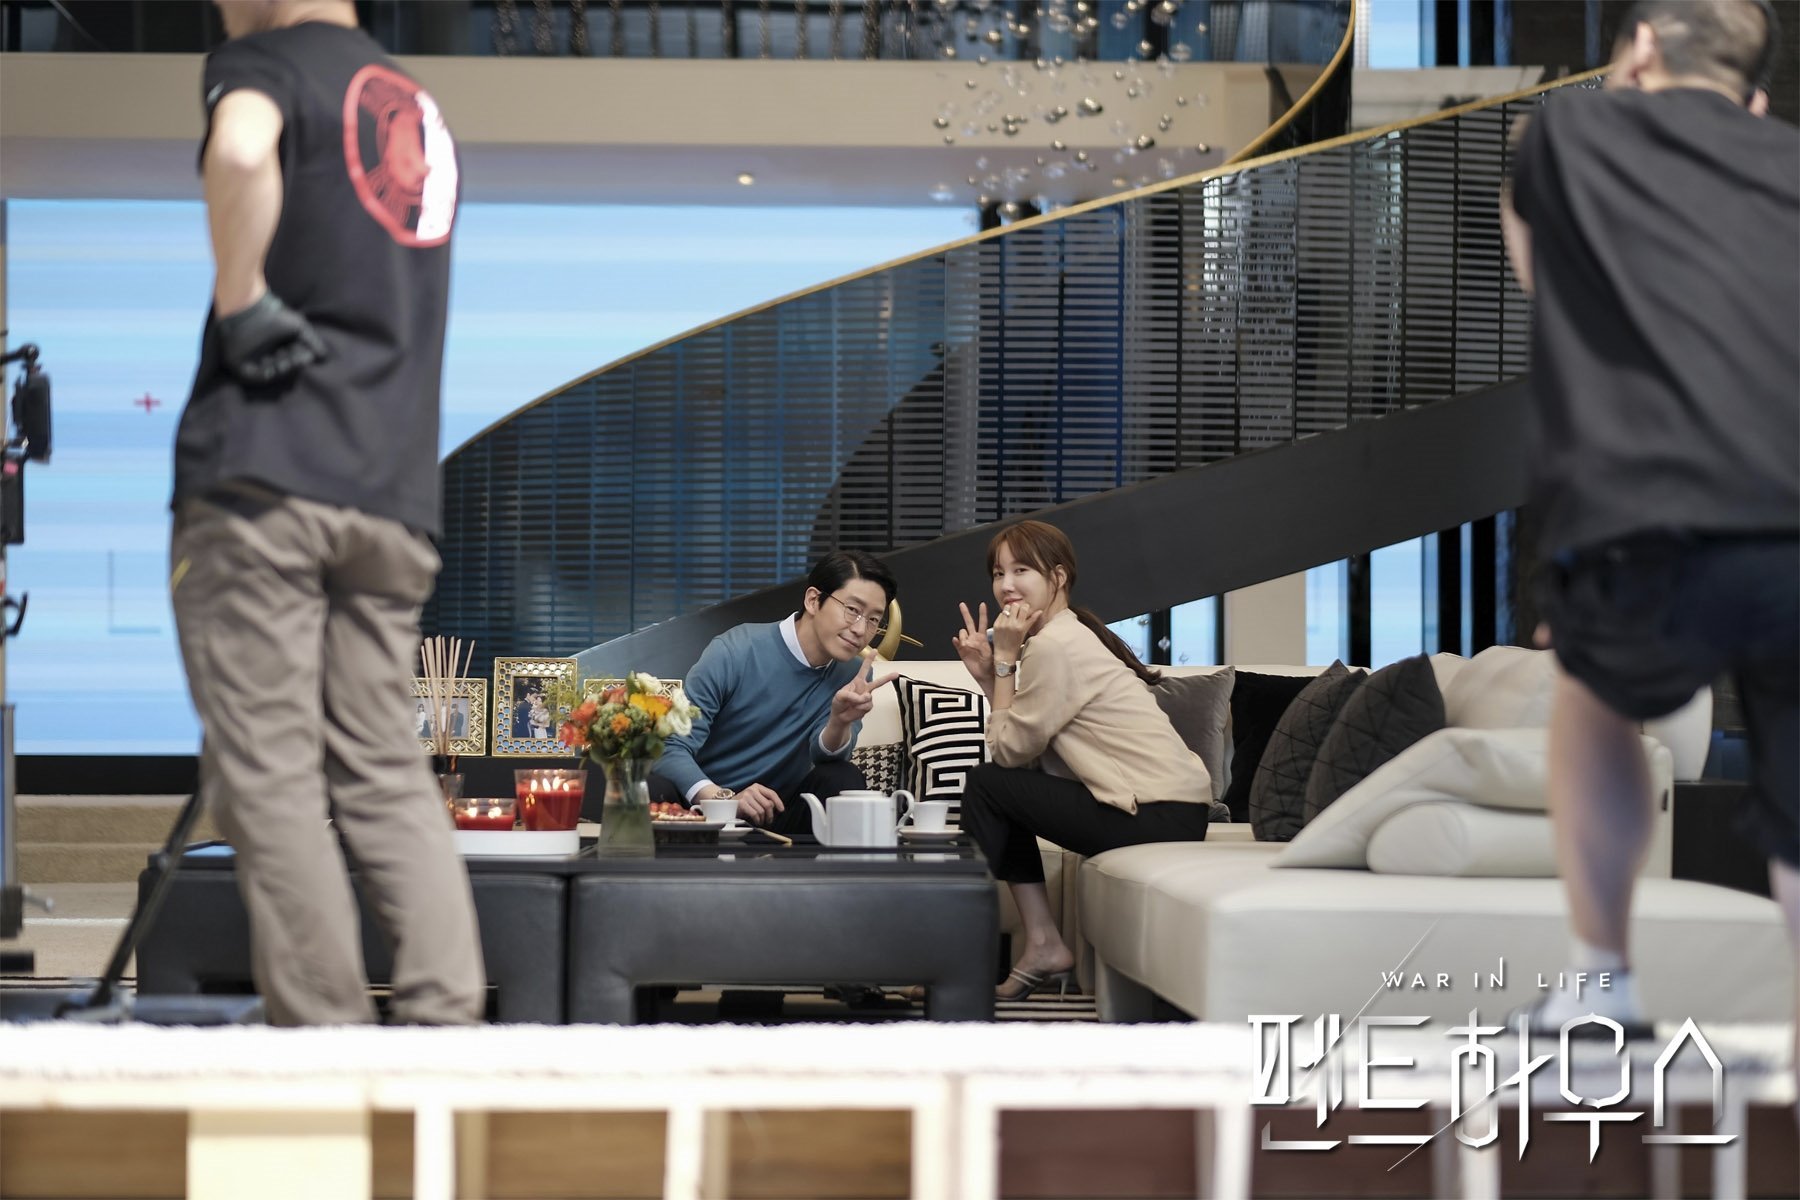 8 penthouses drama 3 episode south korea season The Penthouse